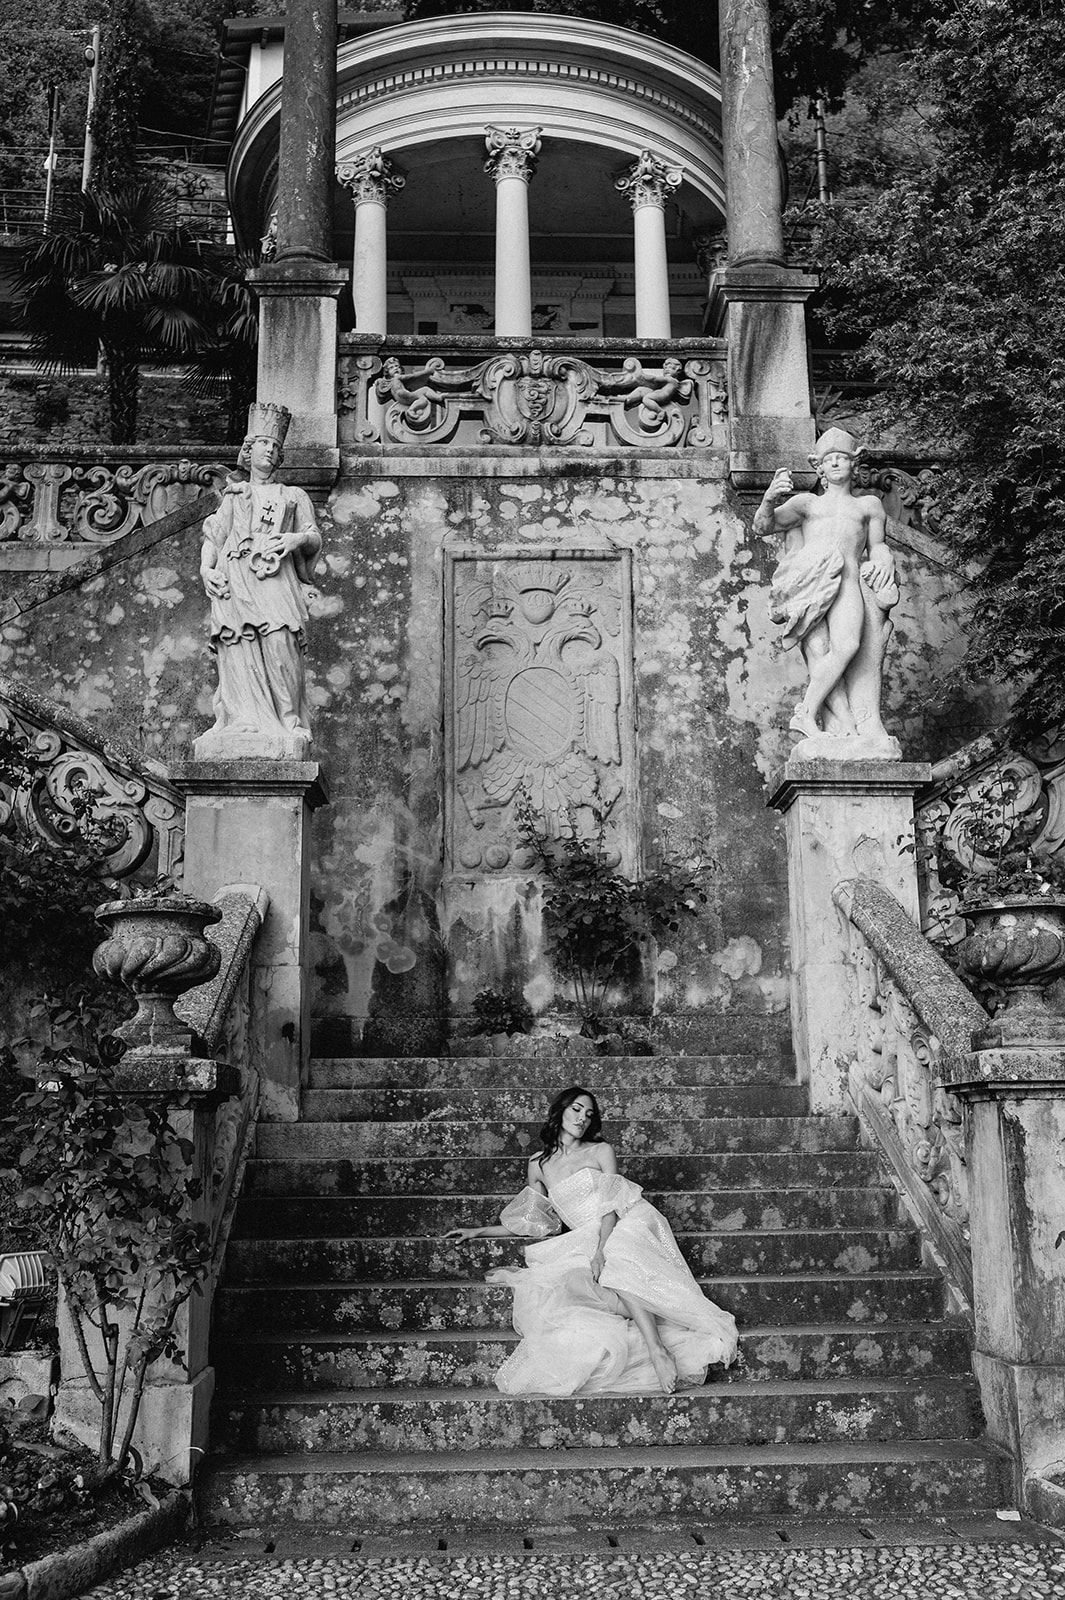 villa monastero bride sitting on steps